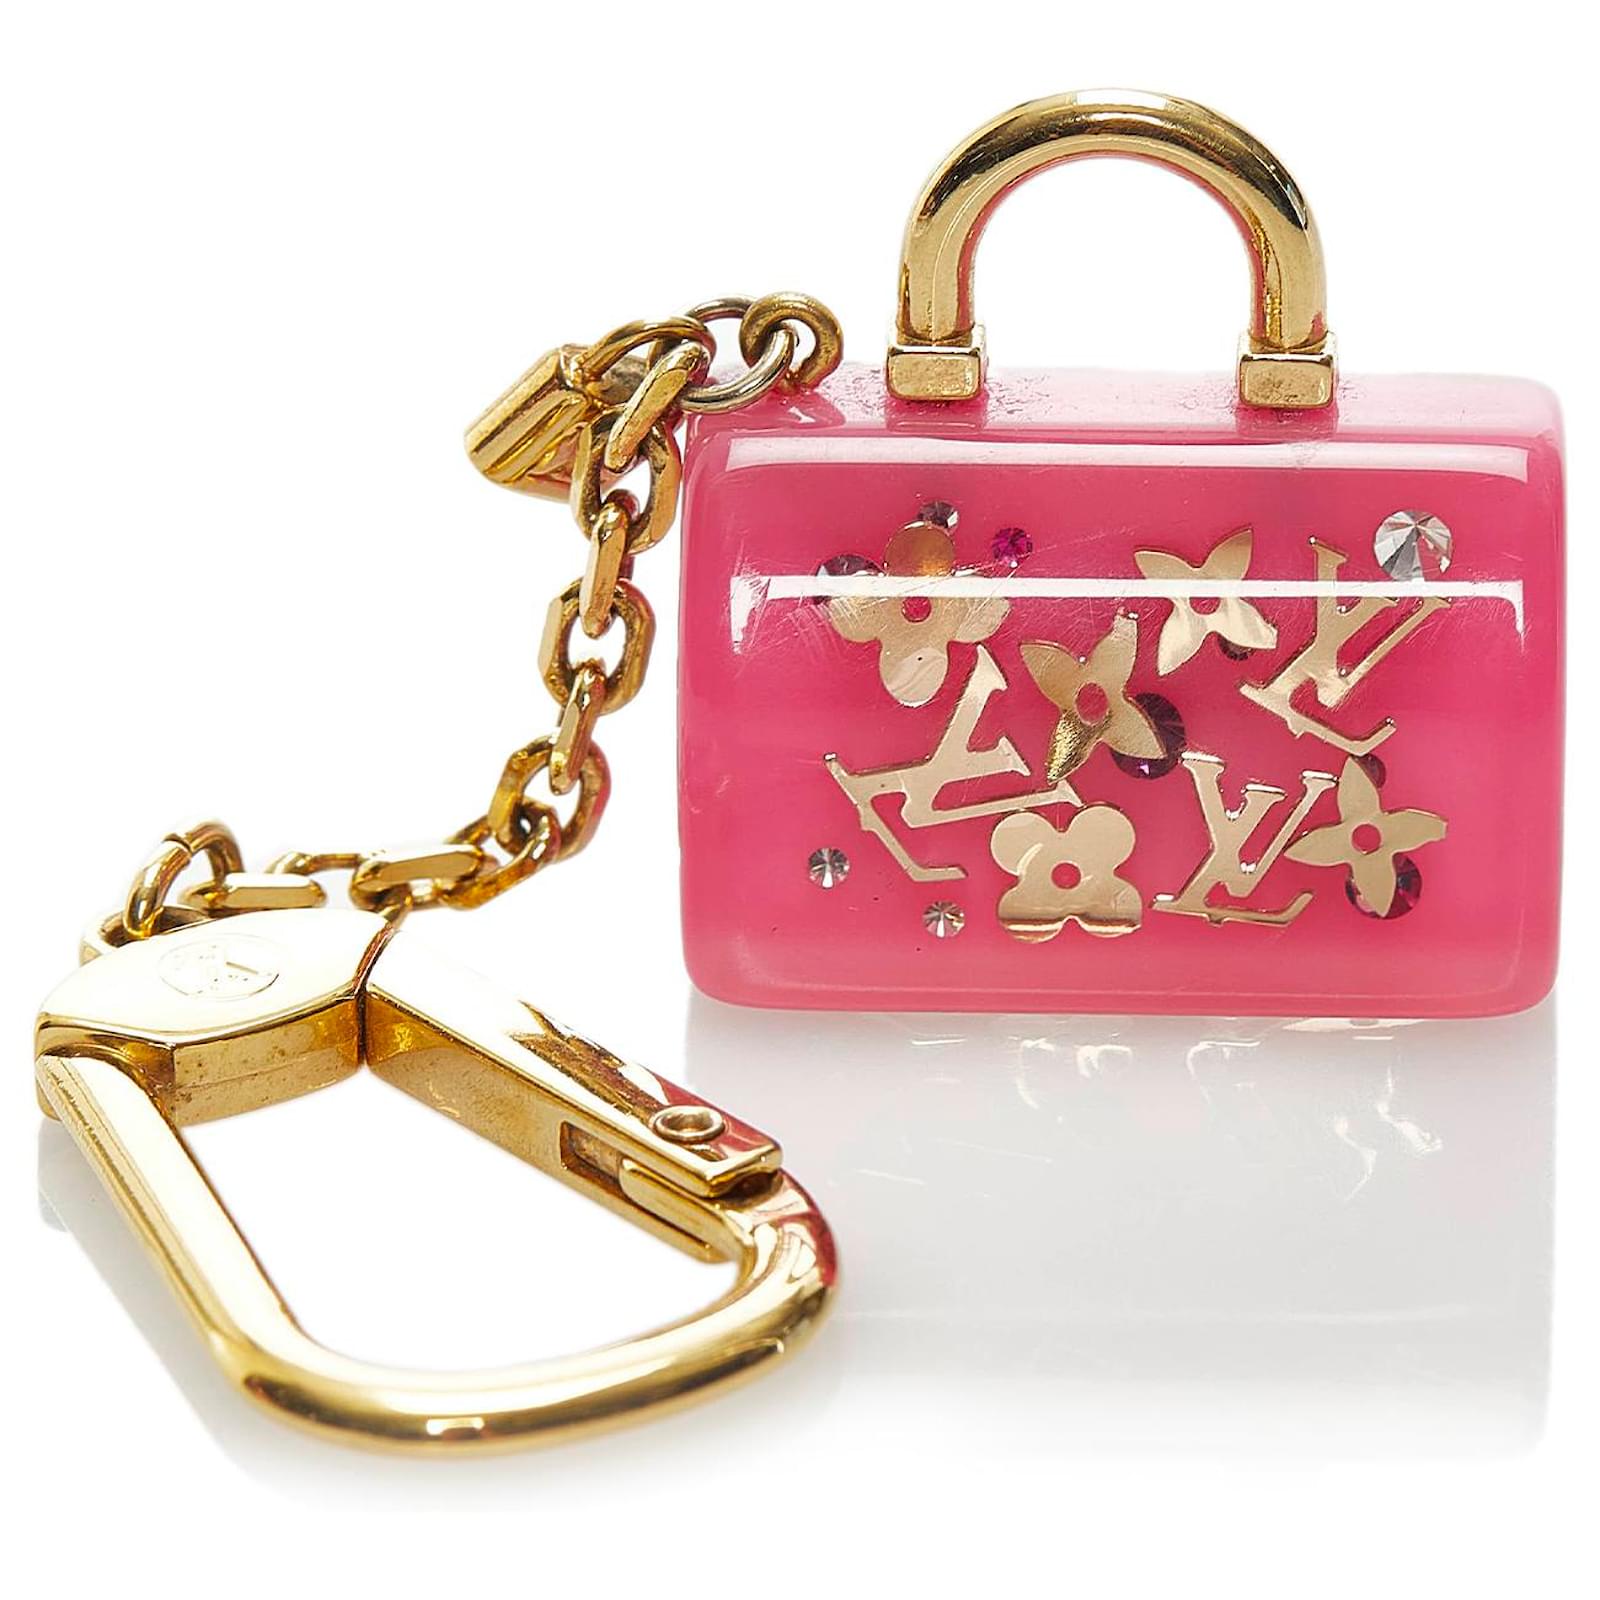 Louis Vuitton Pink Speedy Bag Charm Key Chain Golden Metal Plastic